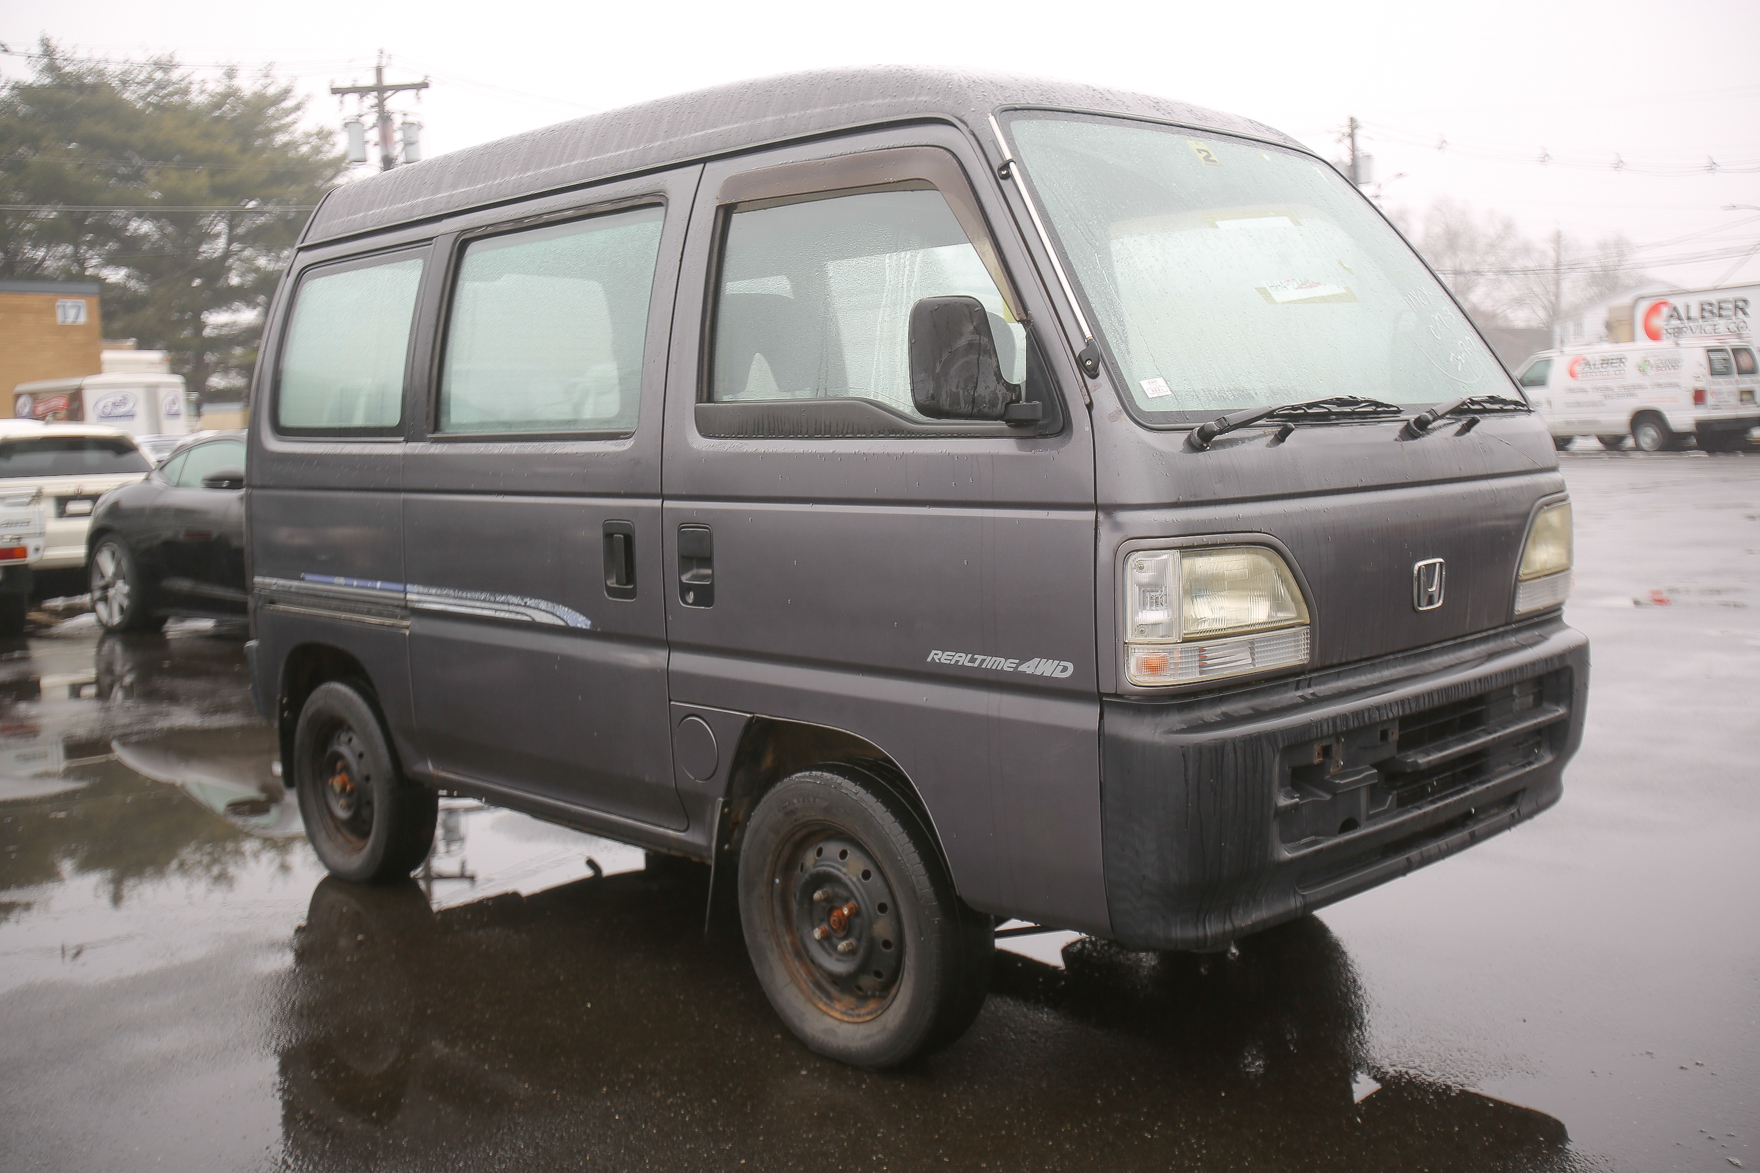 1998 Honda Street Van - Available for $7,995